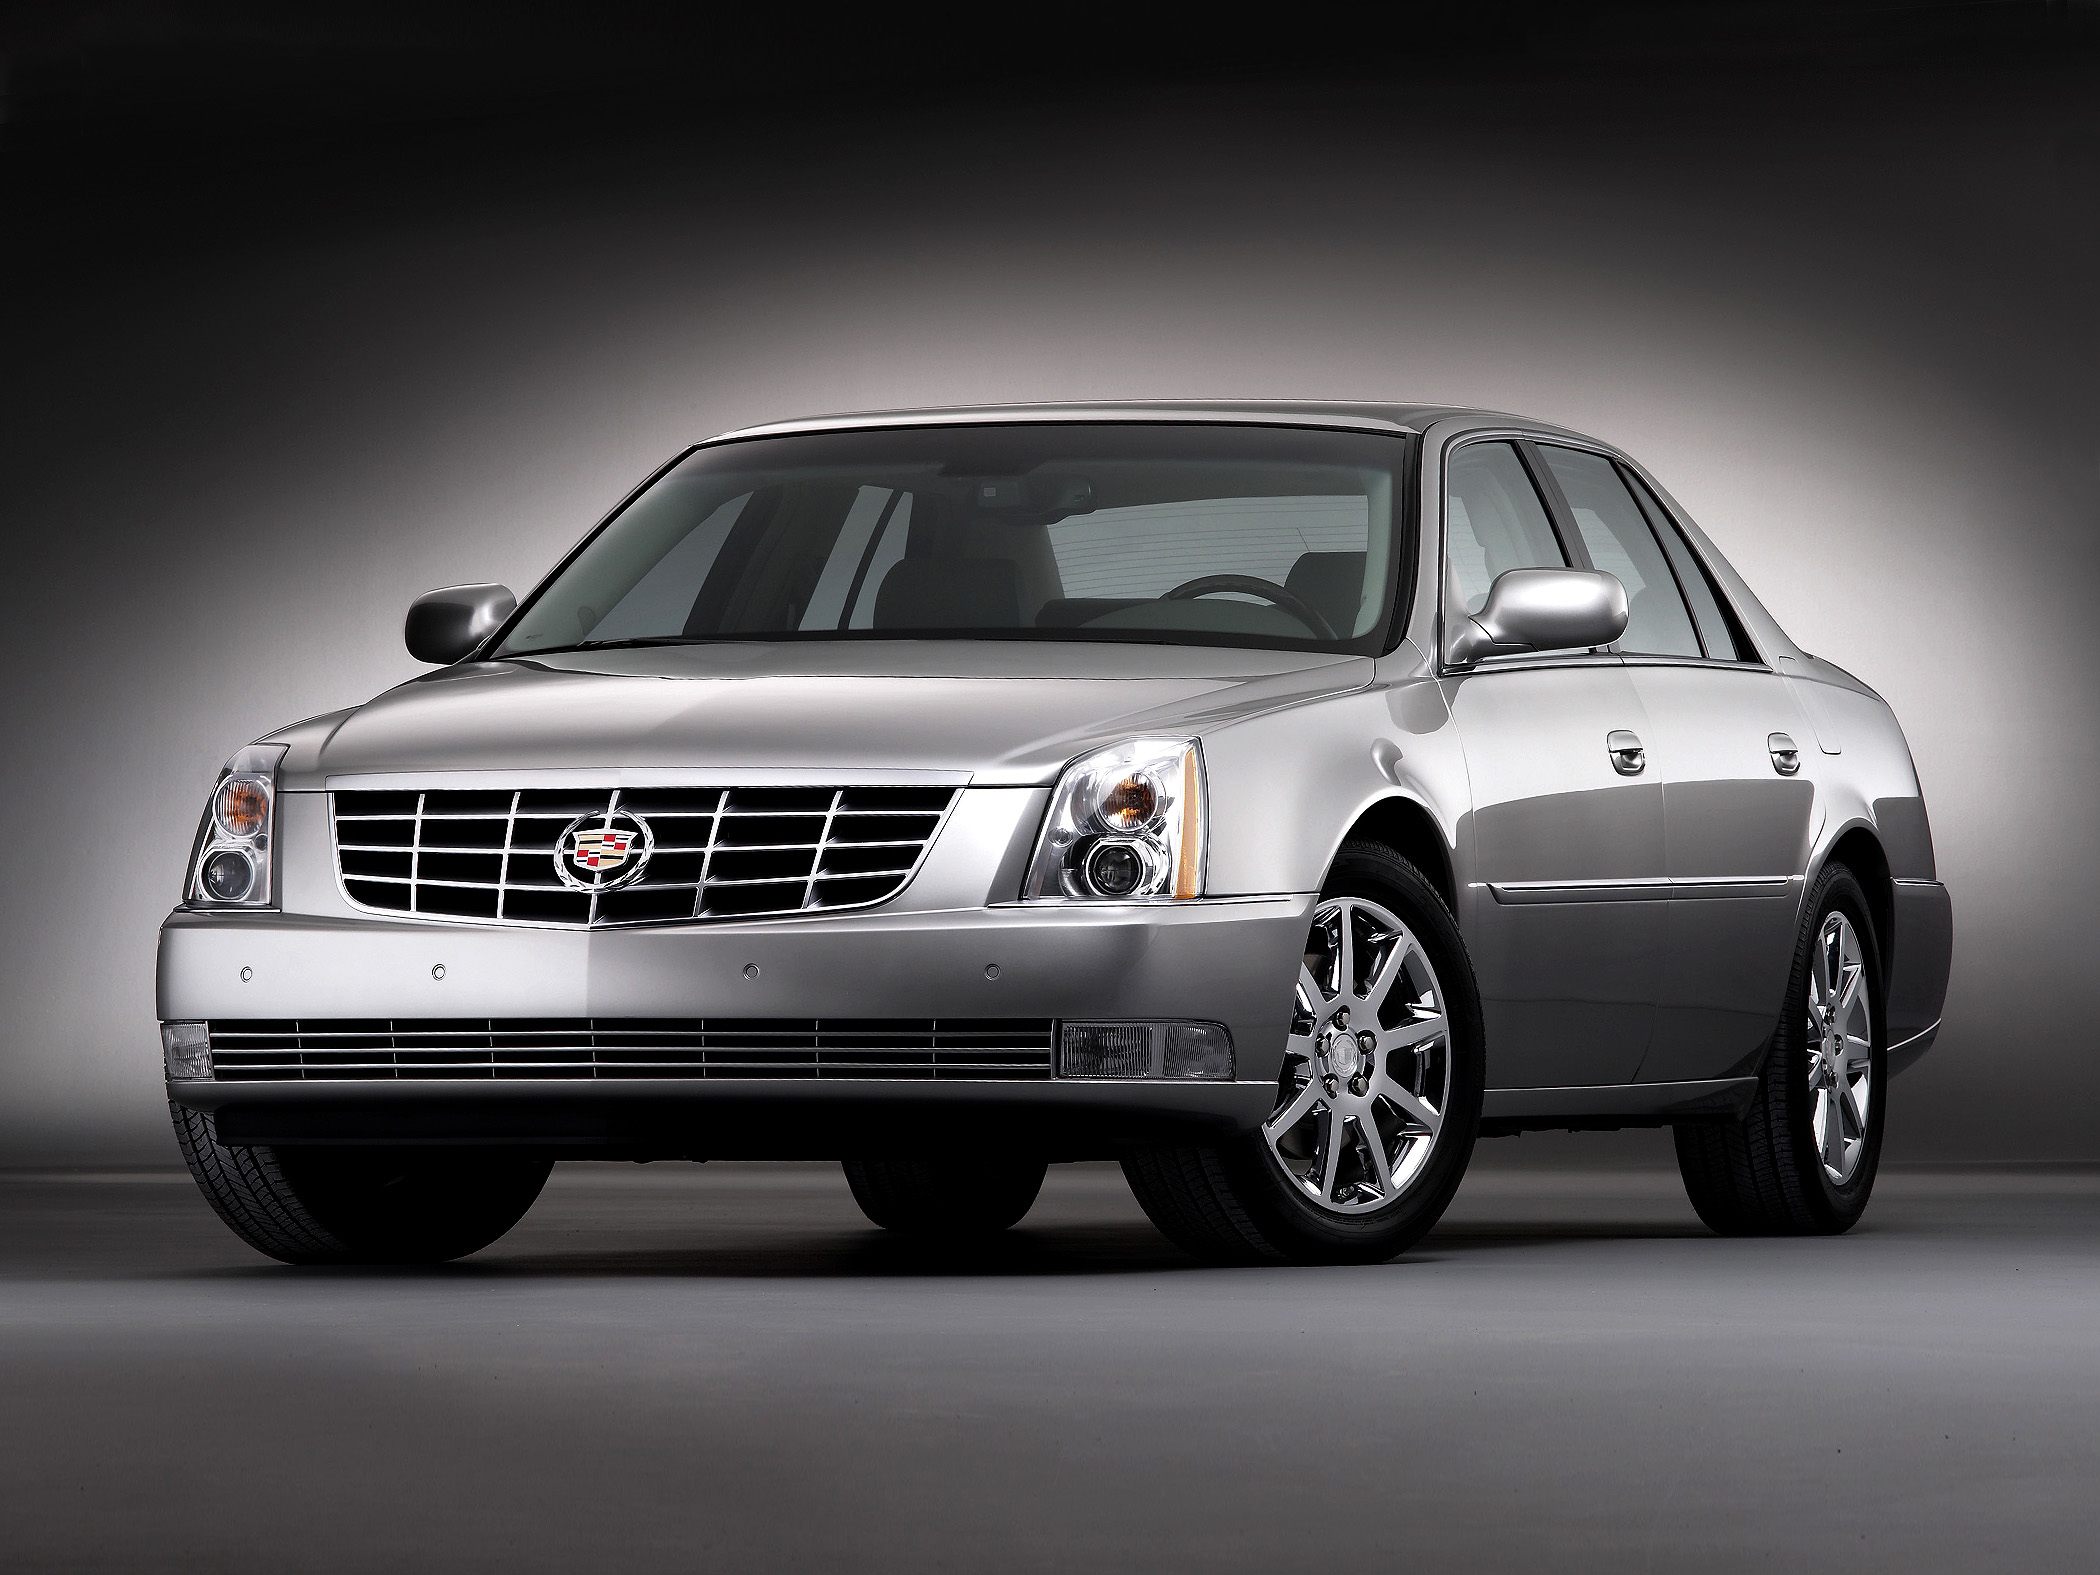 Cadillac Dts Performance Sedanpicture 10 Reviews News Specs Buy Car